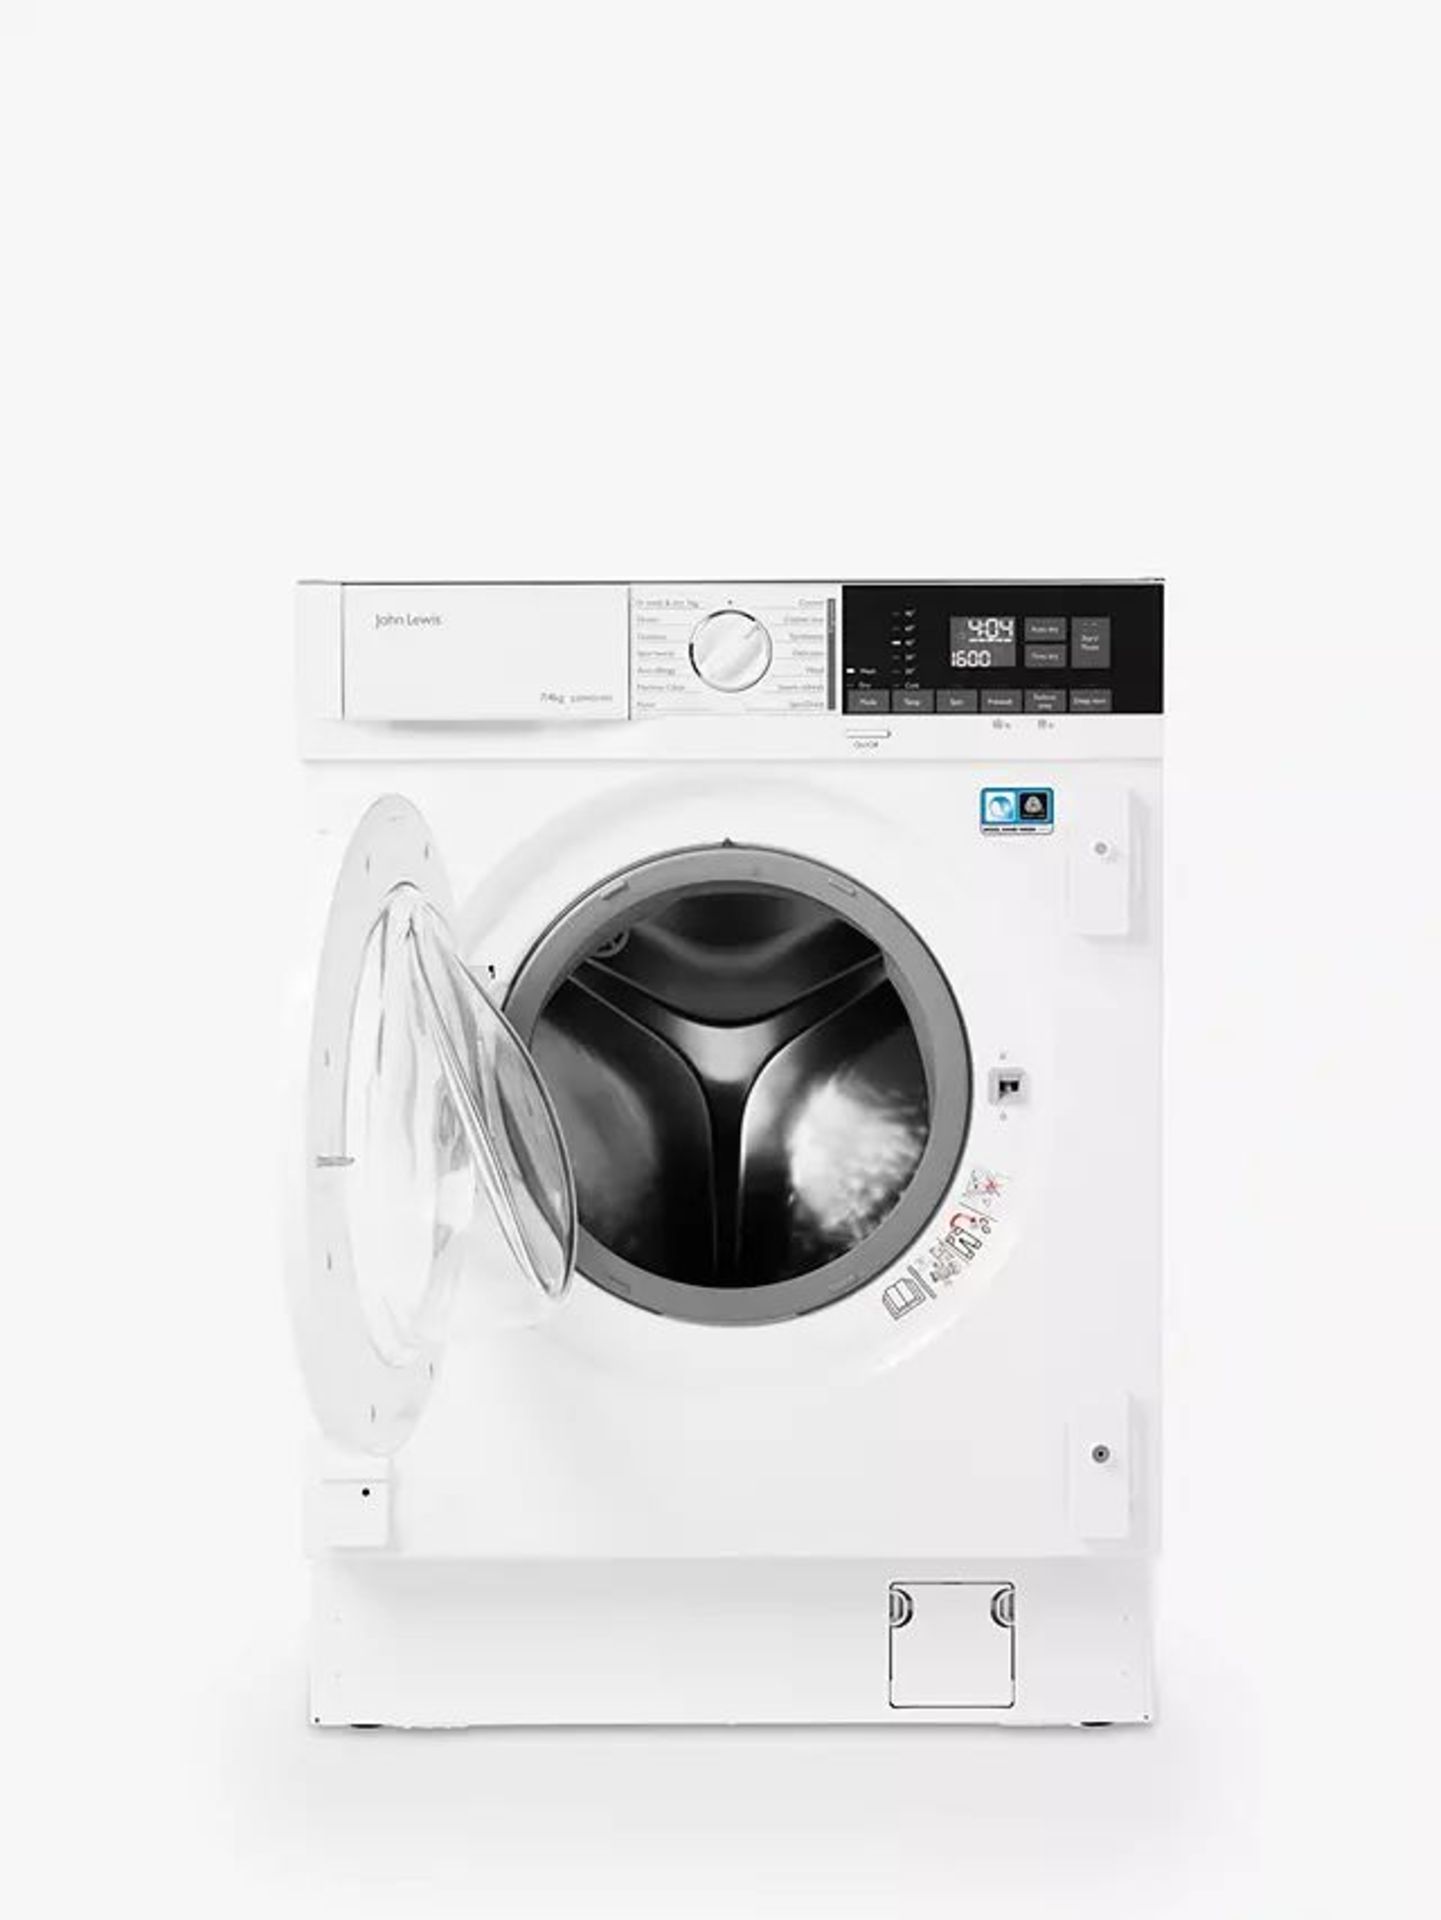 JLBIWD1405 Integrated Washer Dryer, 7kg/4kg Load, 1600rpm Spin, White- H/S. RRP £999.00. For added